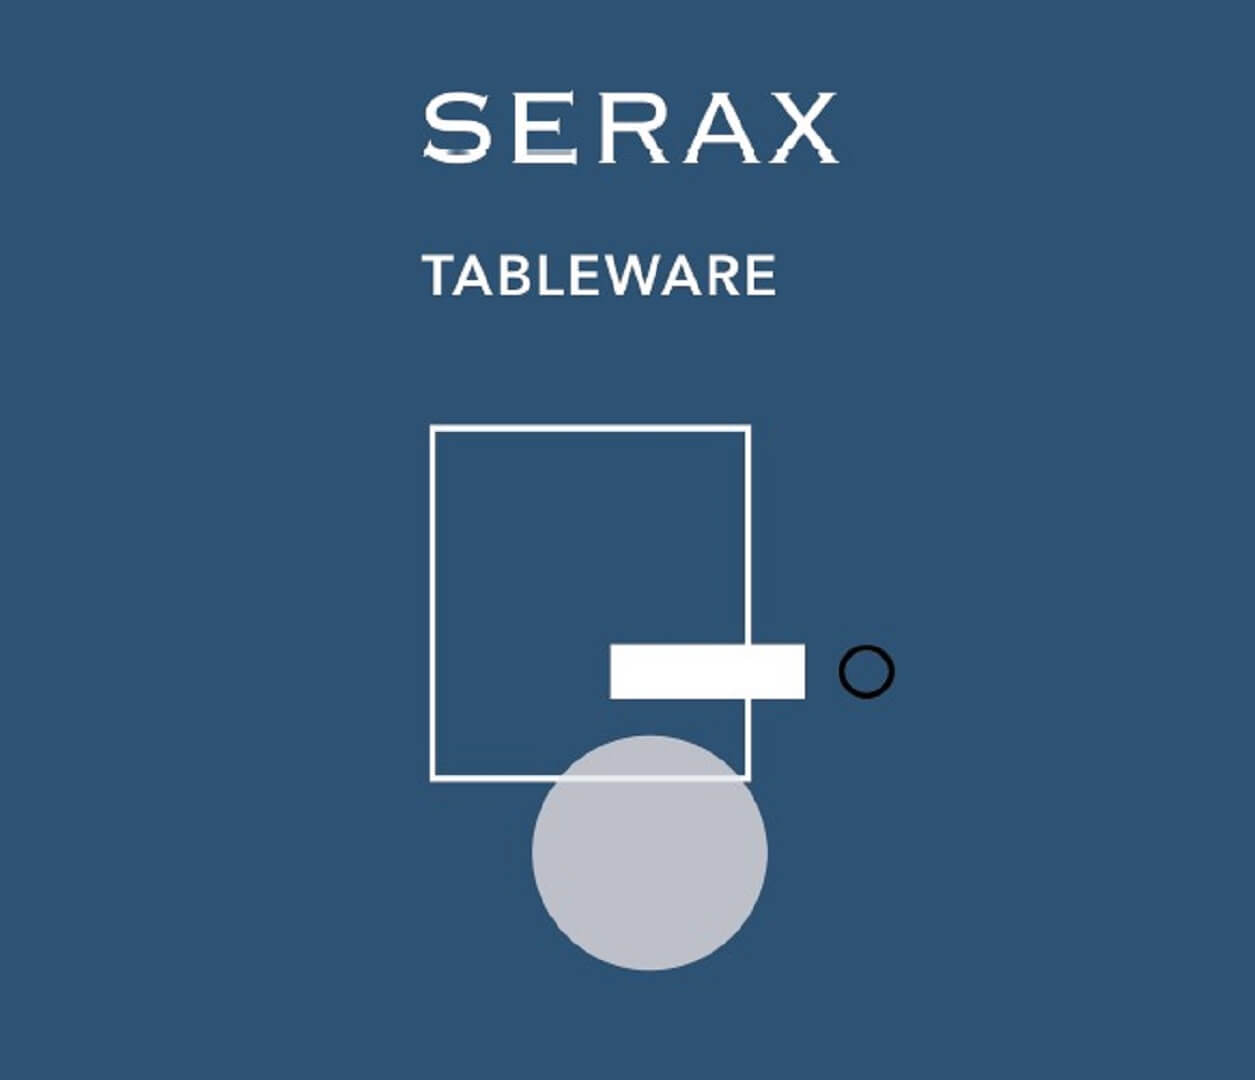 Serax – Tableware 2020